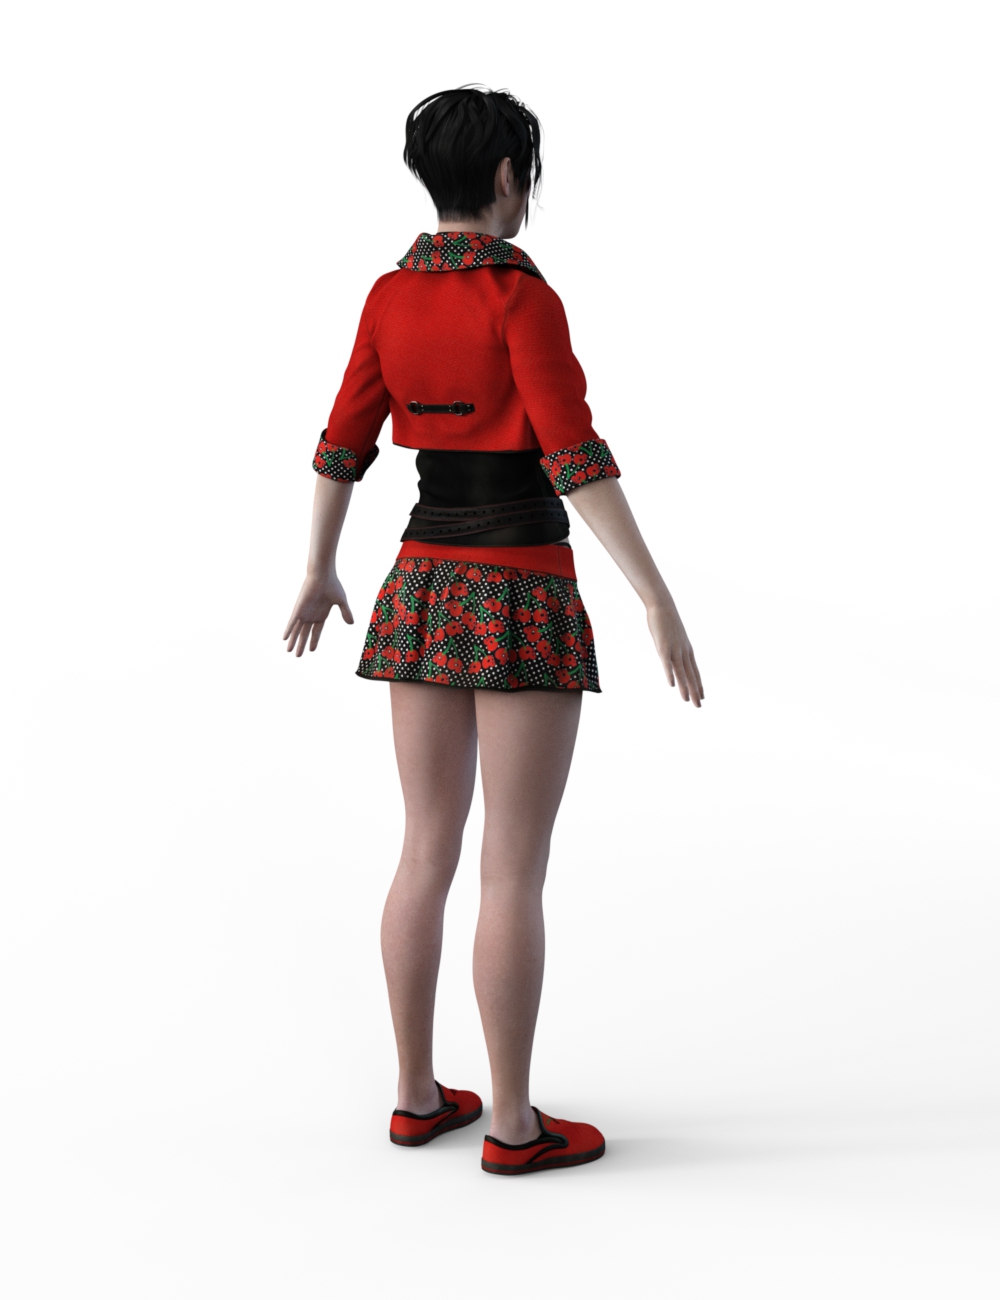 FBX- Base Female Cute Punk Outfit by: Paleo, 3D Models by Daz 3D